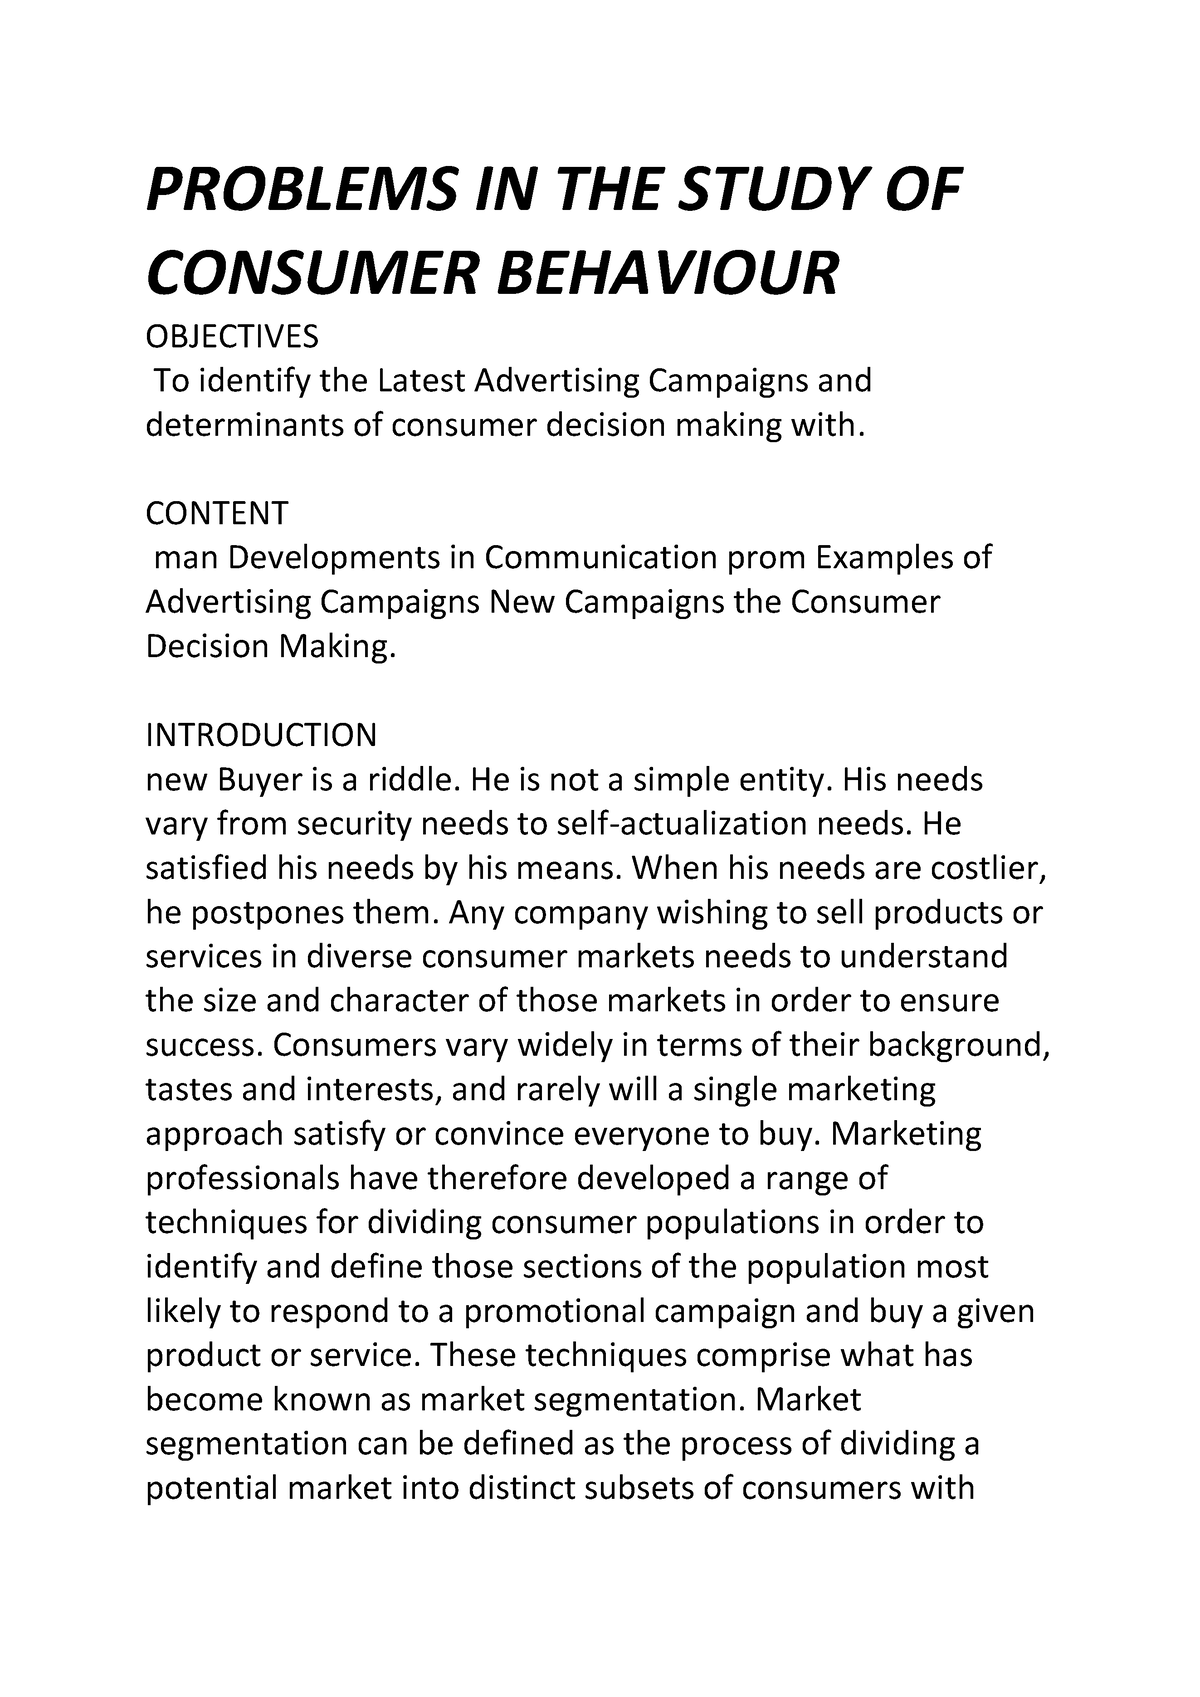 phd thesis on consumer behaviour